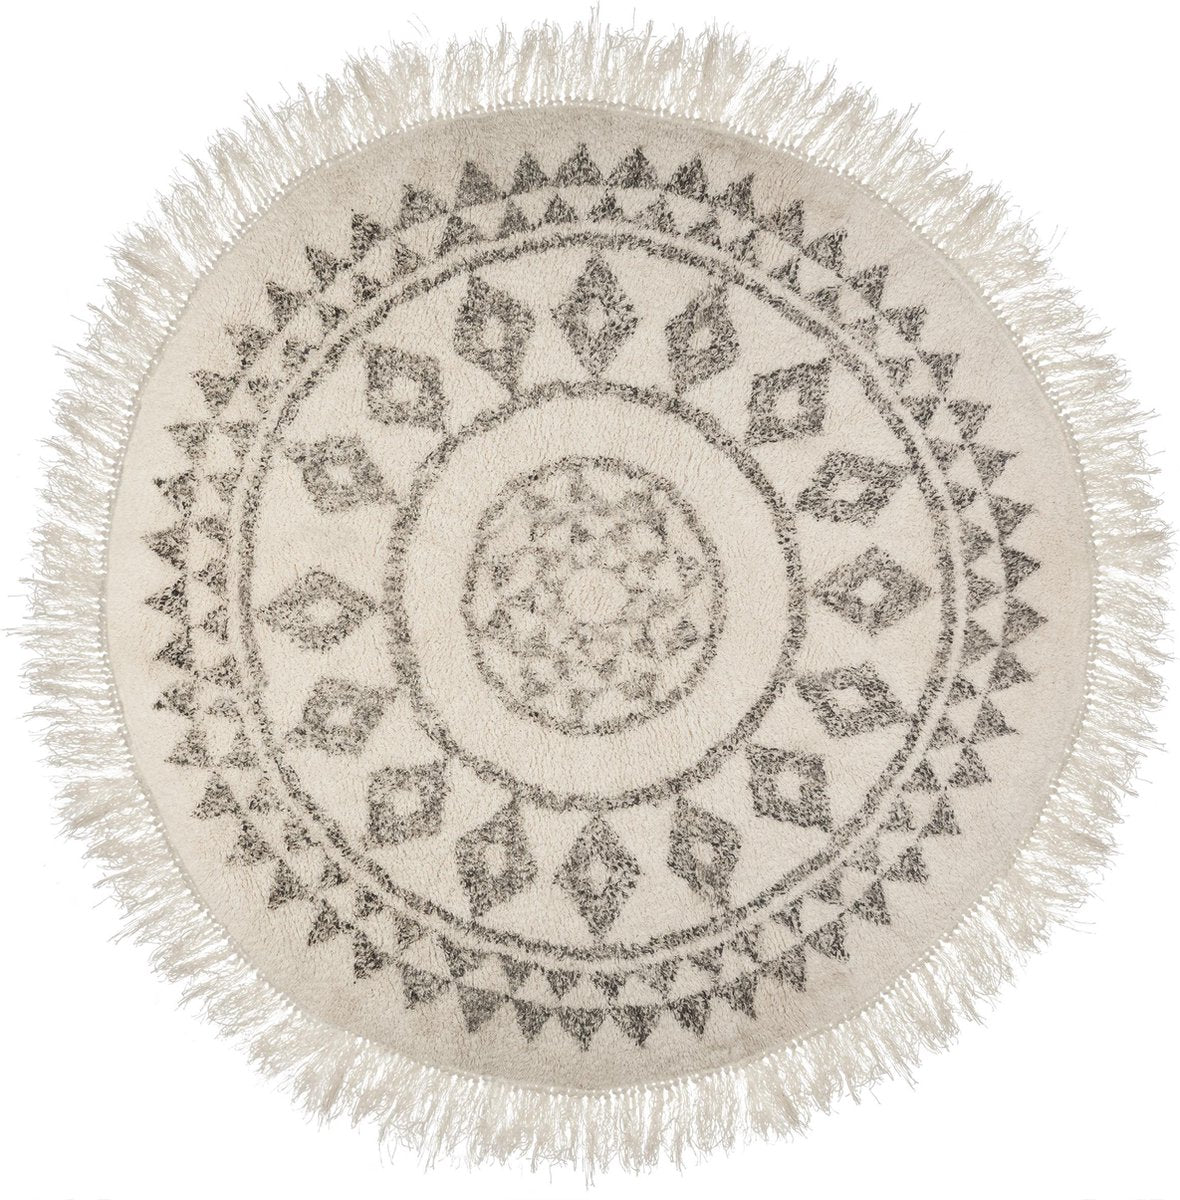 Atmosphera Carpet round 120 cm geometric patterns - rug - rugs - beautiful round carpet - bohemian style